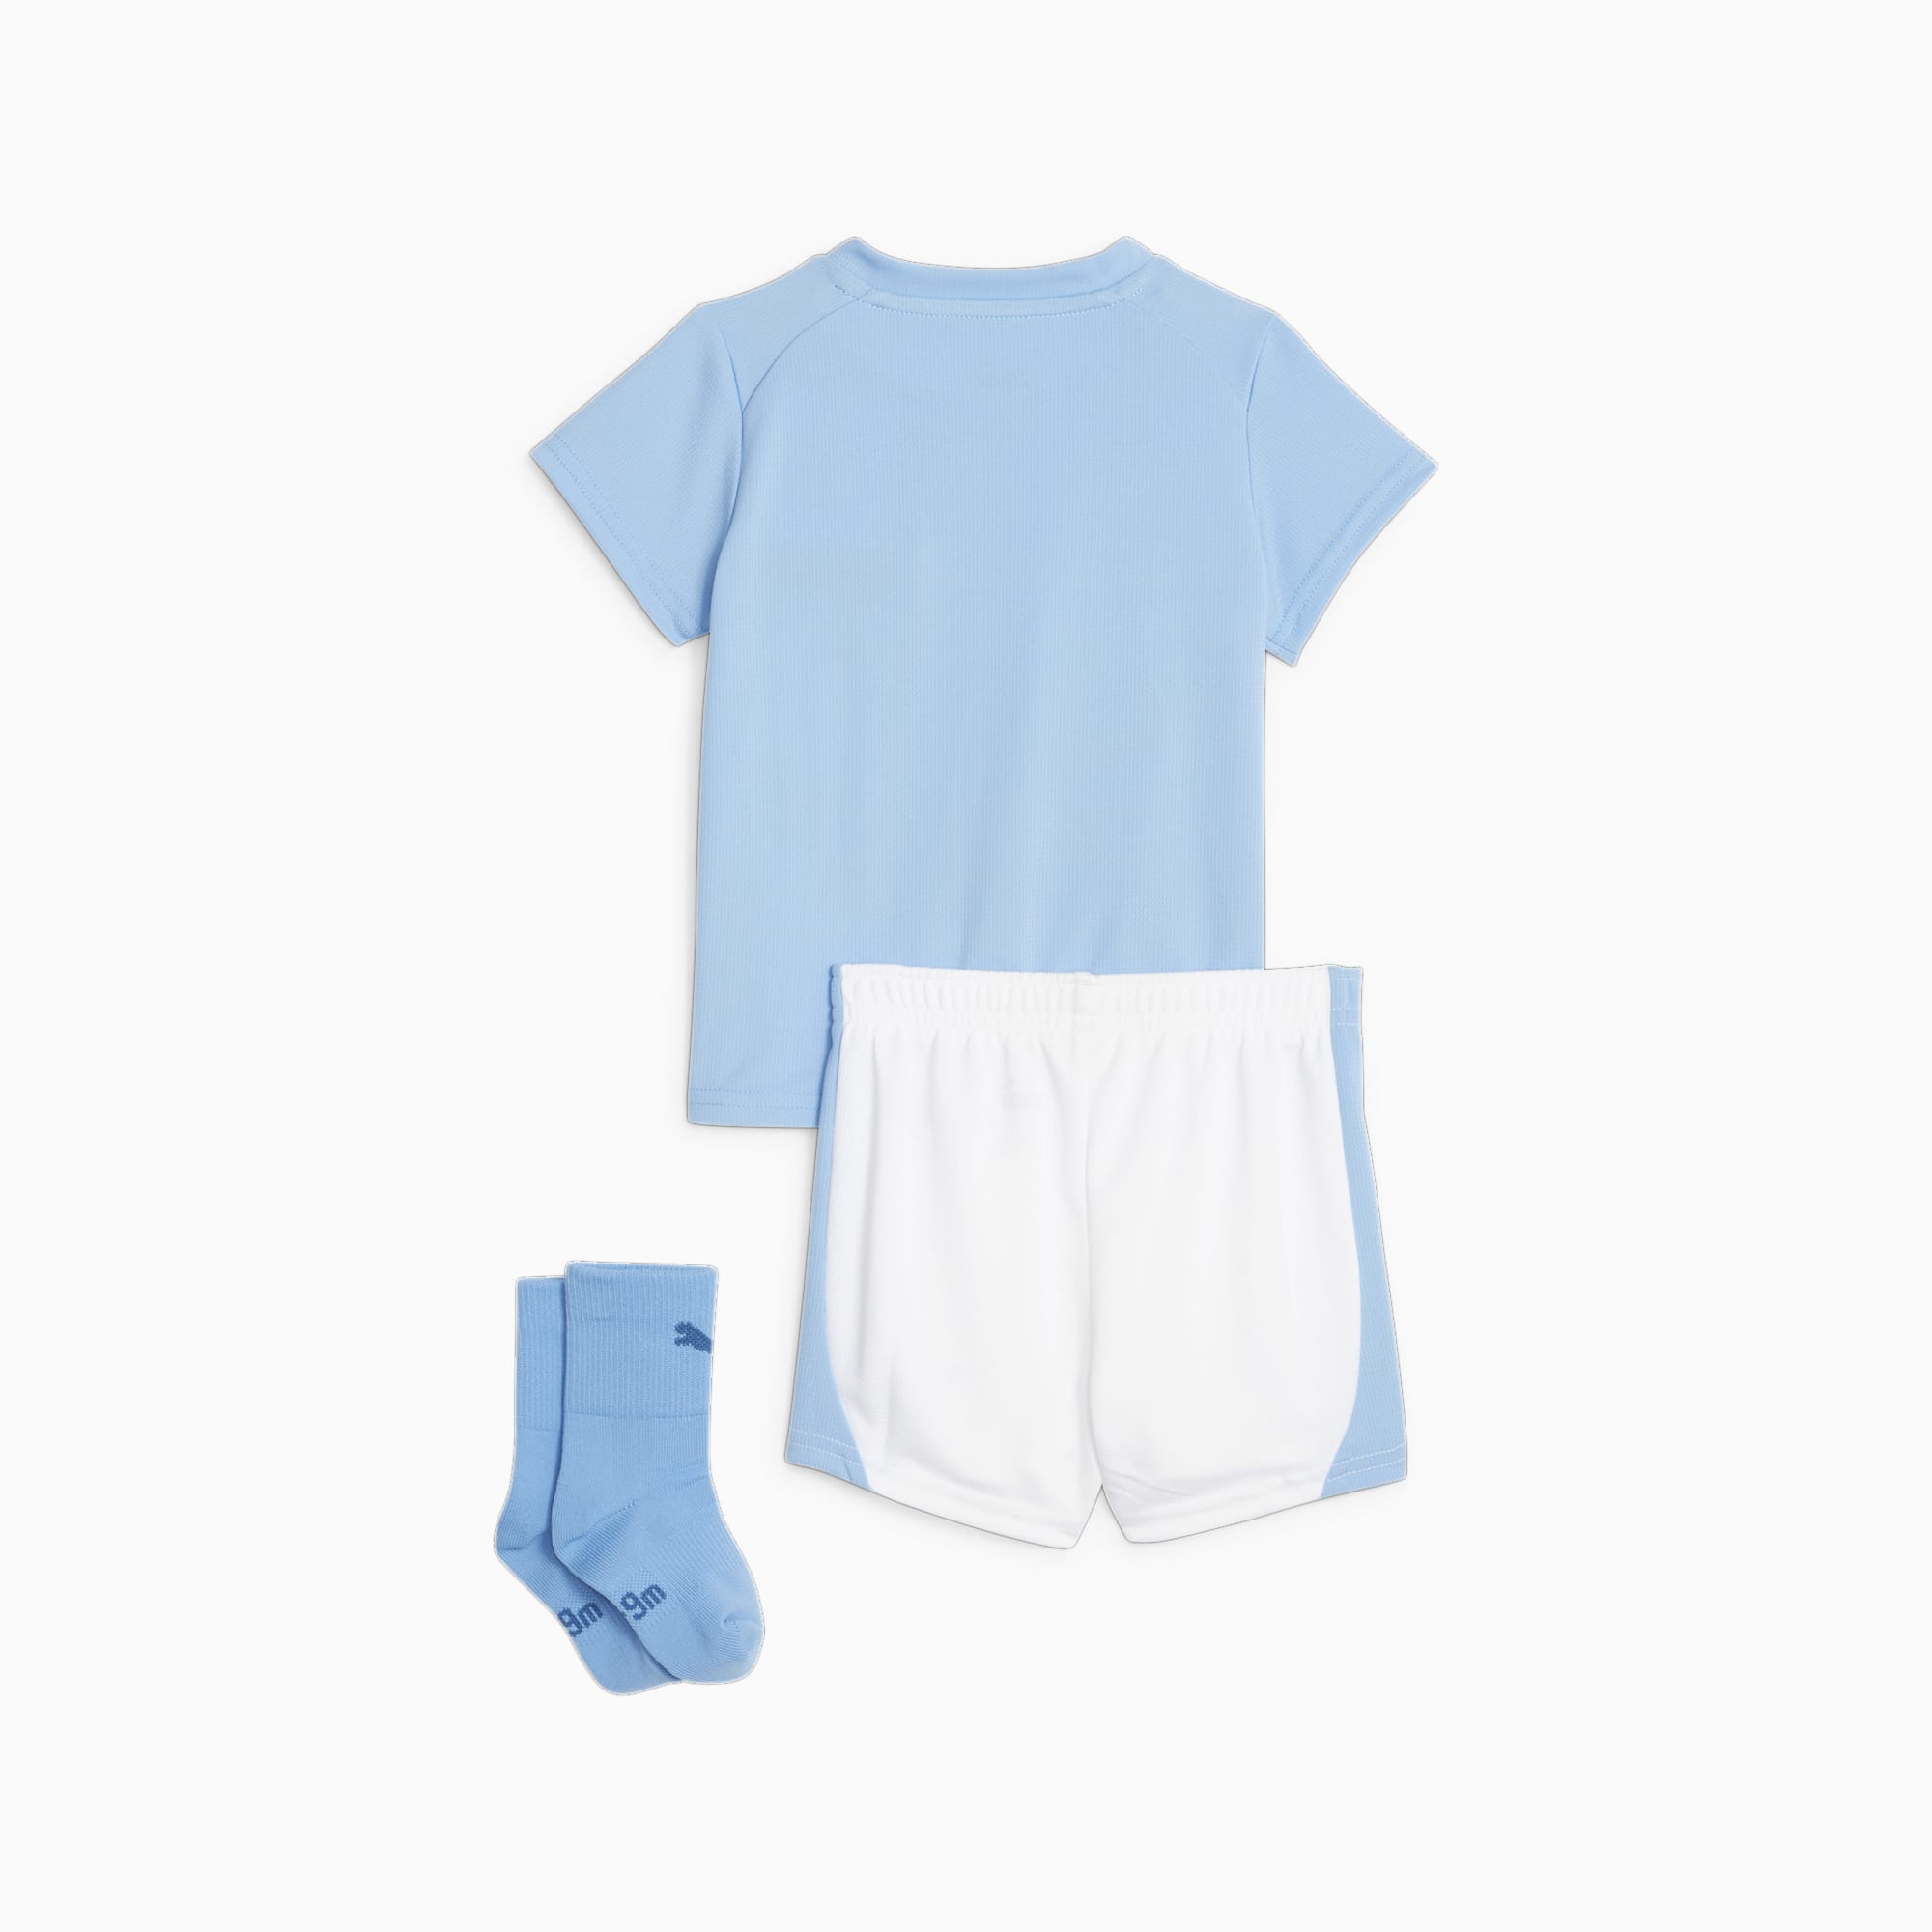 PUMA Manchester City F.C. Home Baby Kit, Light Blue/White, Size 86, Clothing